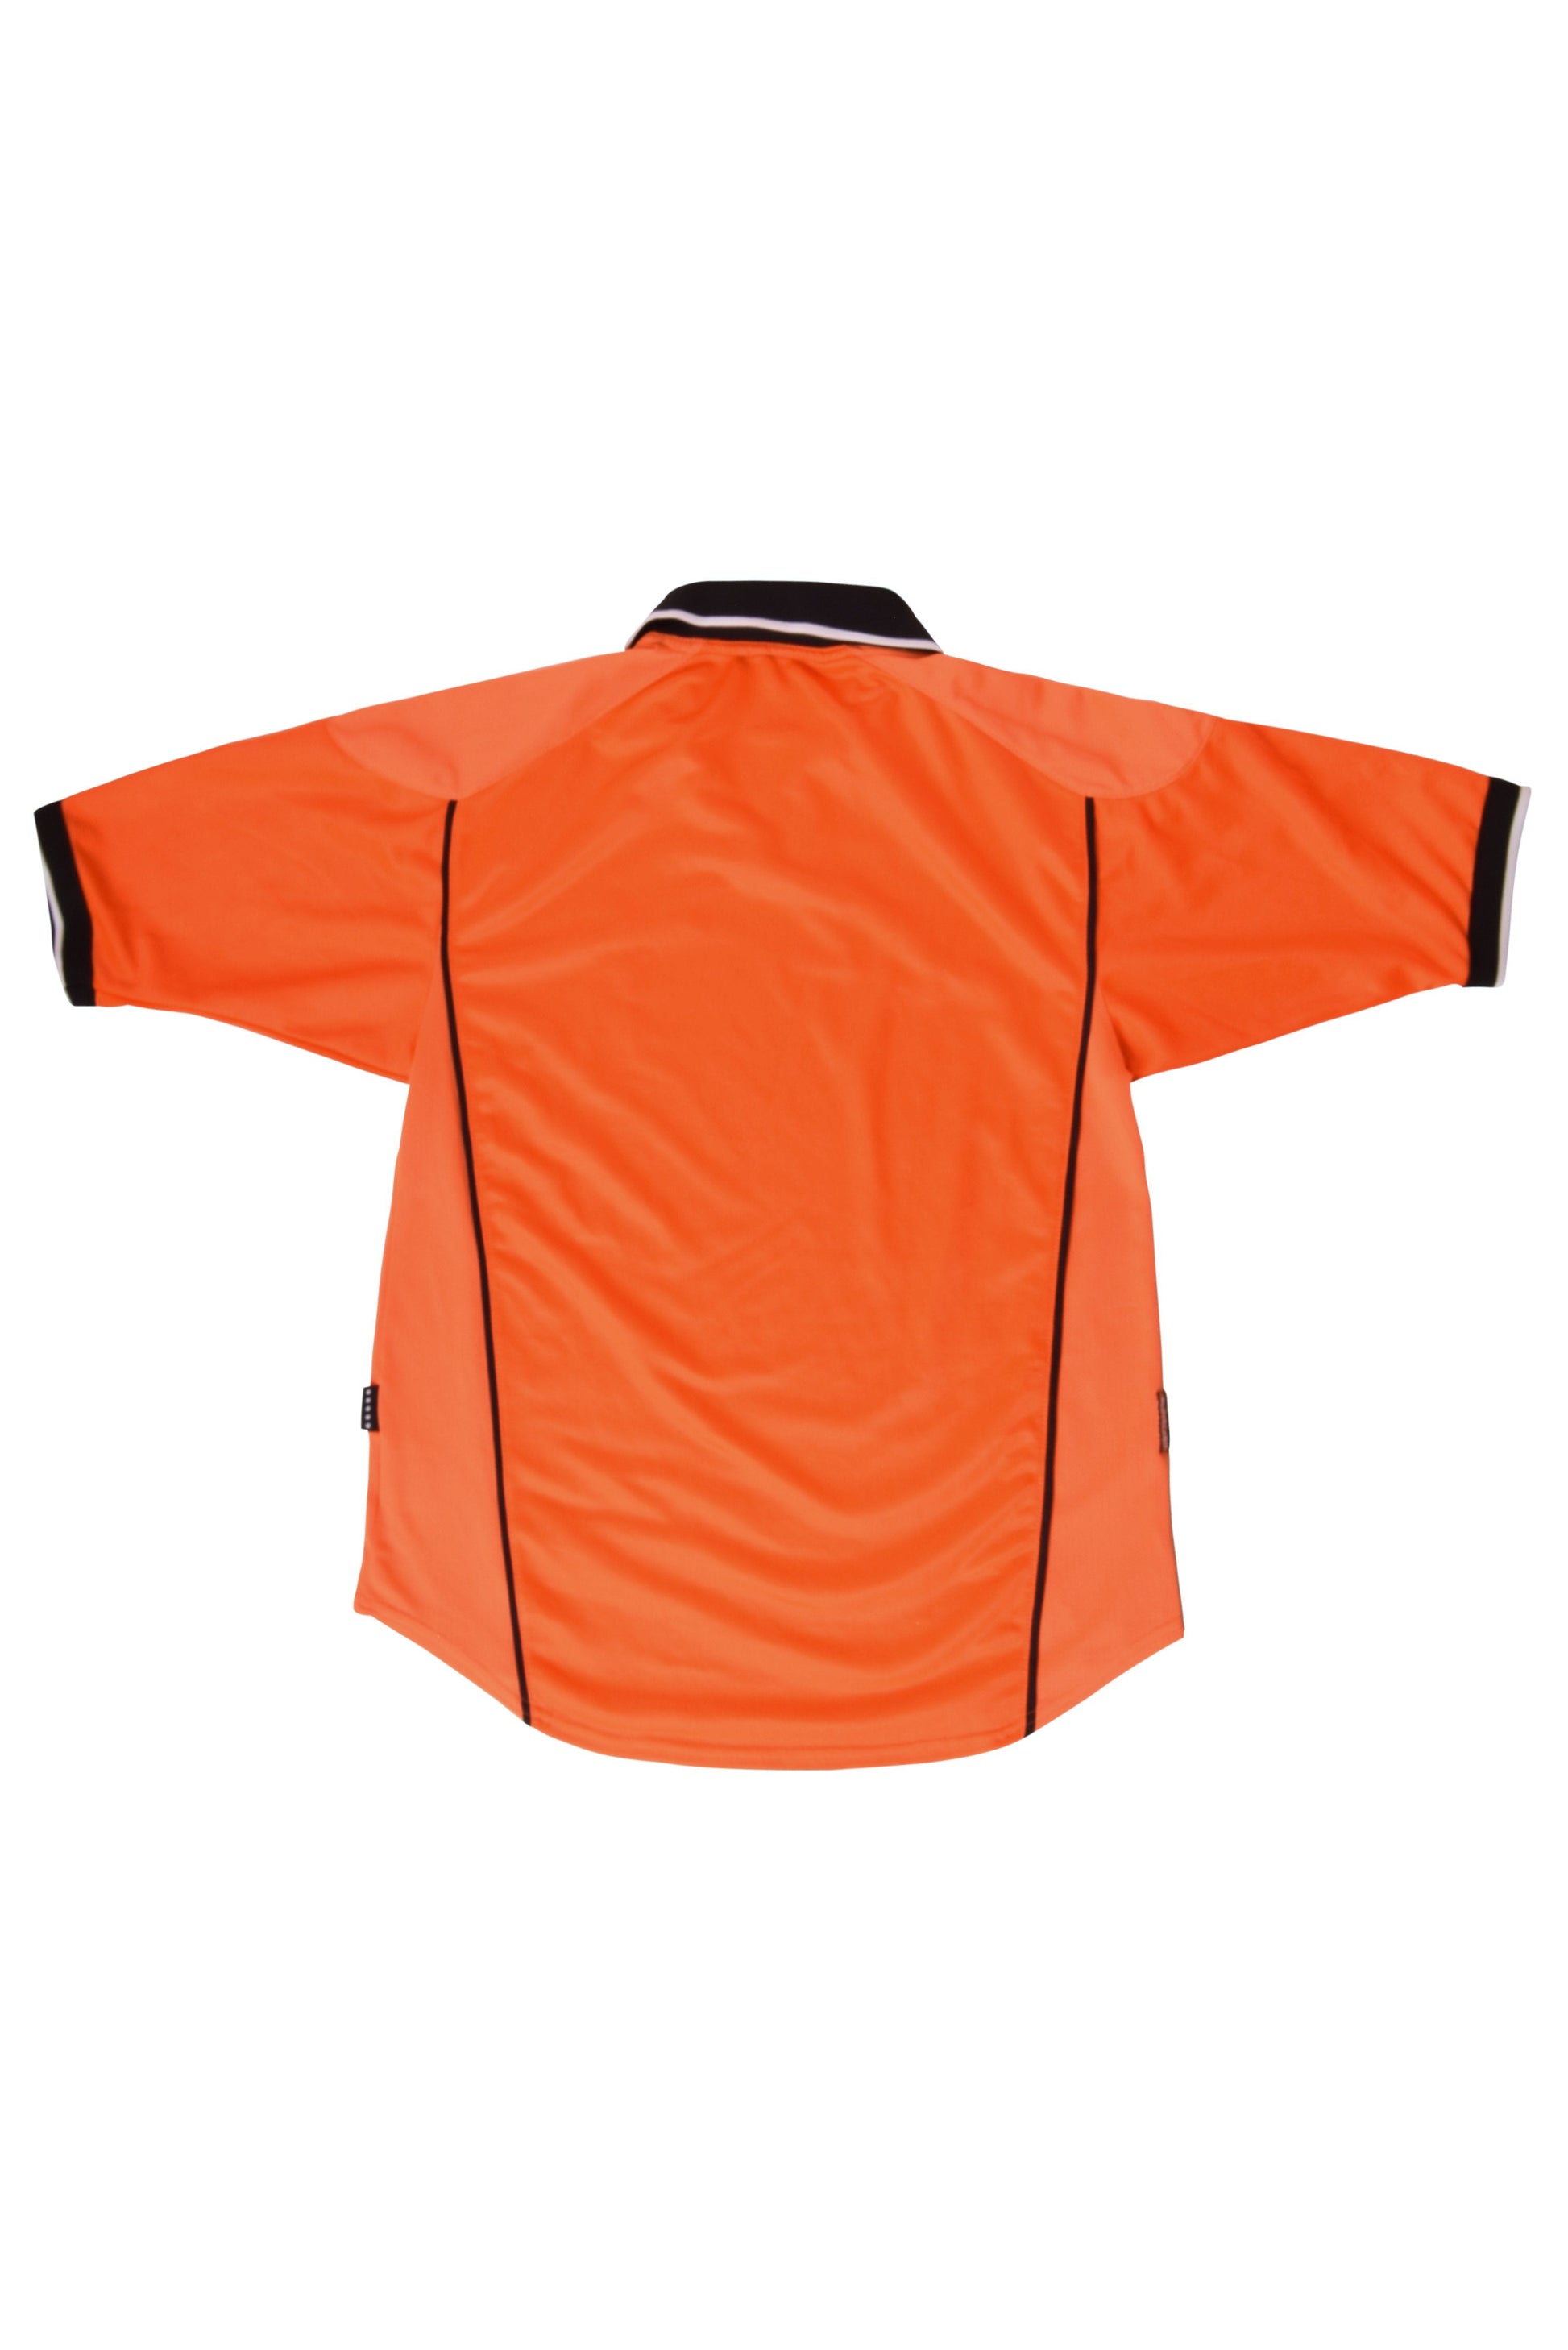 Vintage Holland Netherlands Nike 1998-1999 Home Football Shirt Orange Size M Made in UK